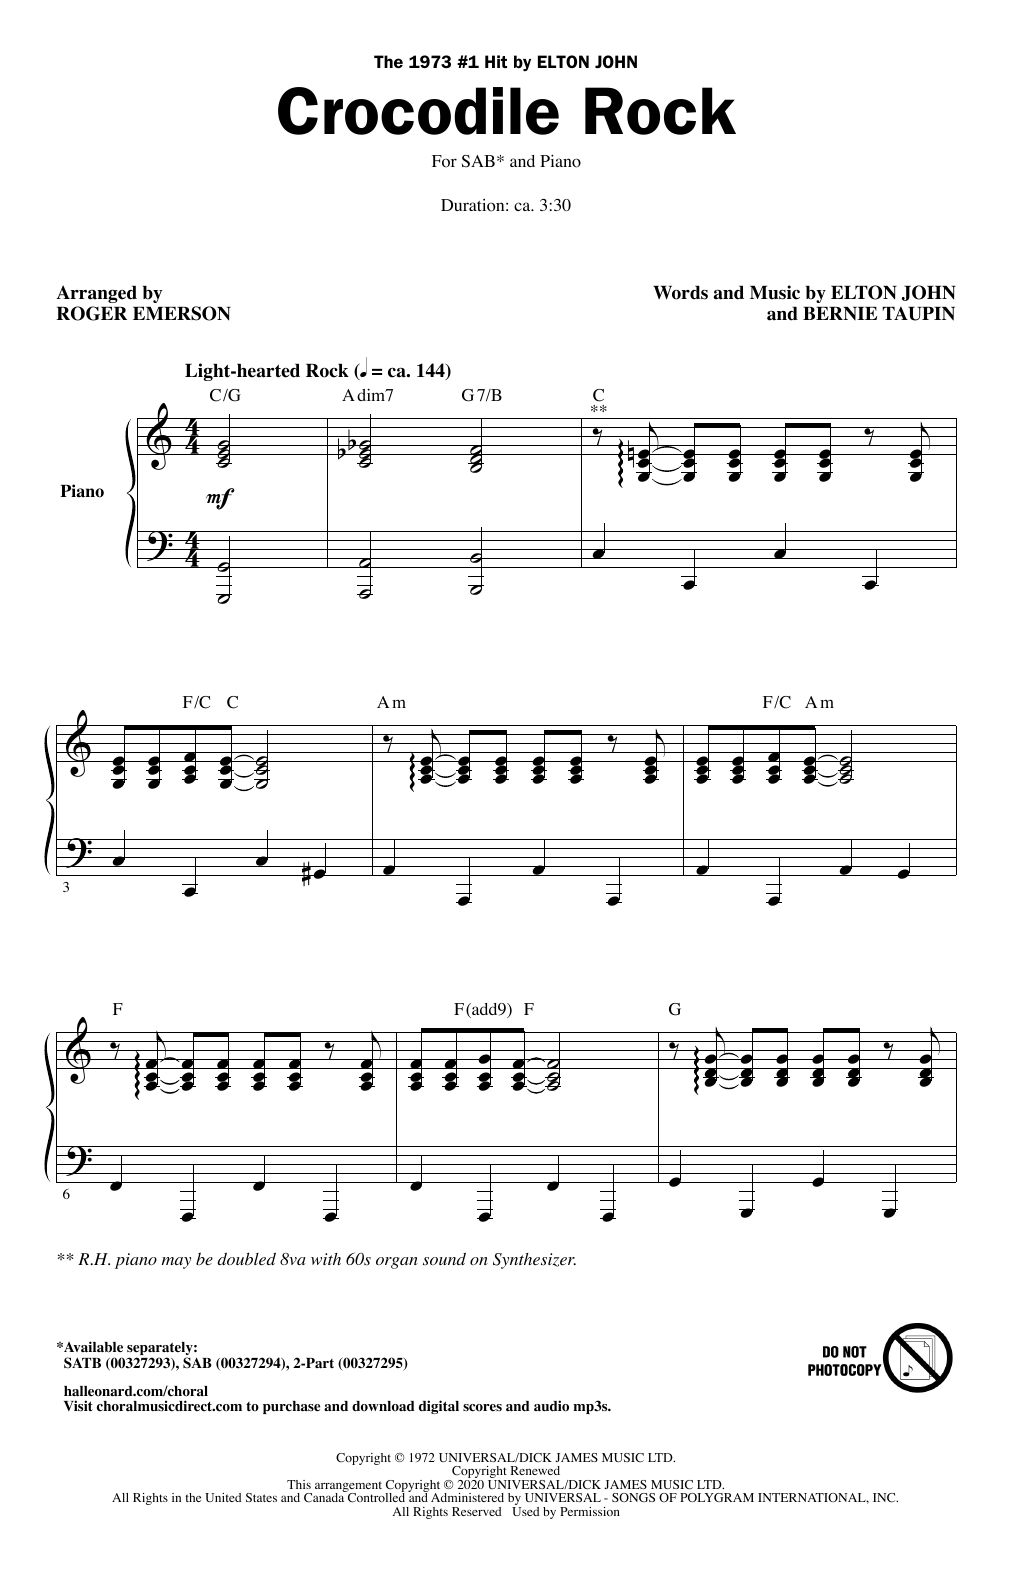 Elton John Crocodile Rock (arr. Roger Emerson) sheet music notes and chords arranged for 2-Part Choir